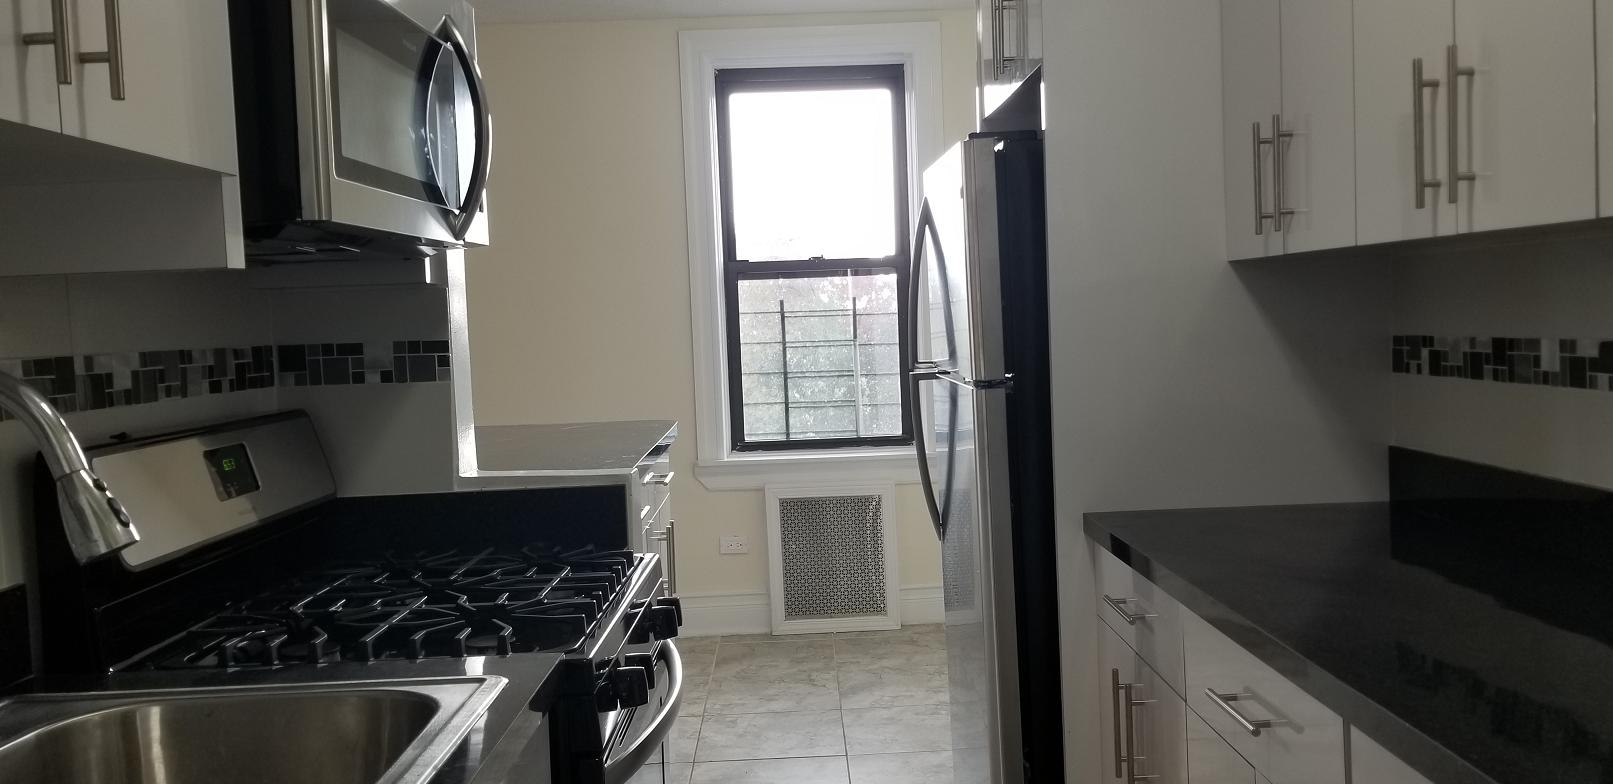 Apartment in Kew Gardens - Brevoort Street  Queens, NY 11415